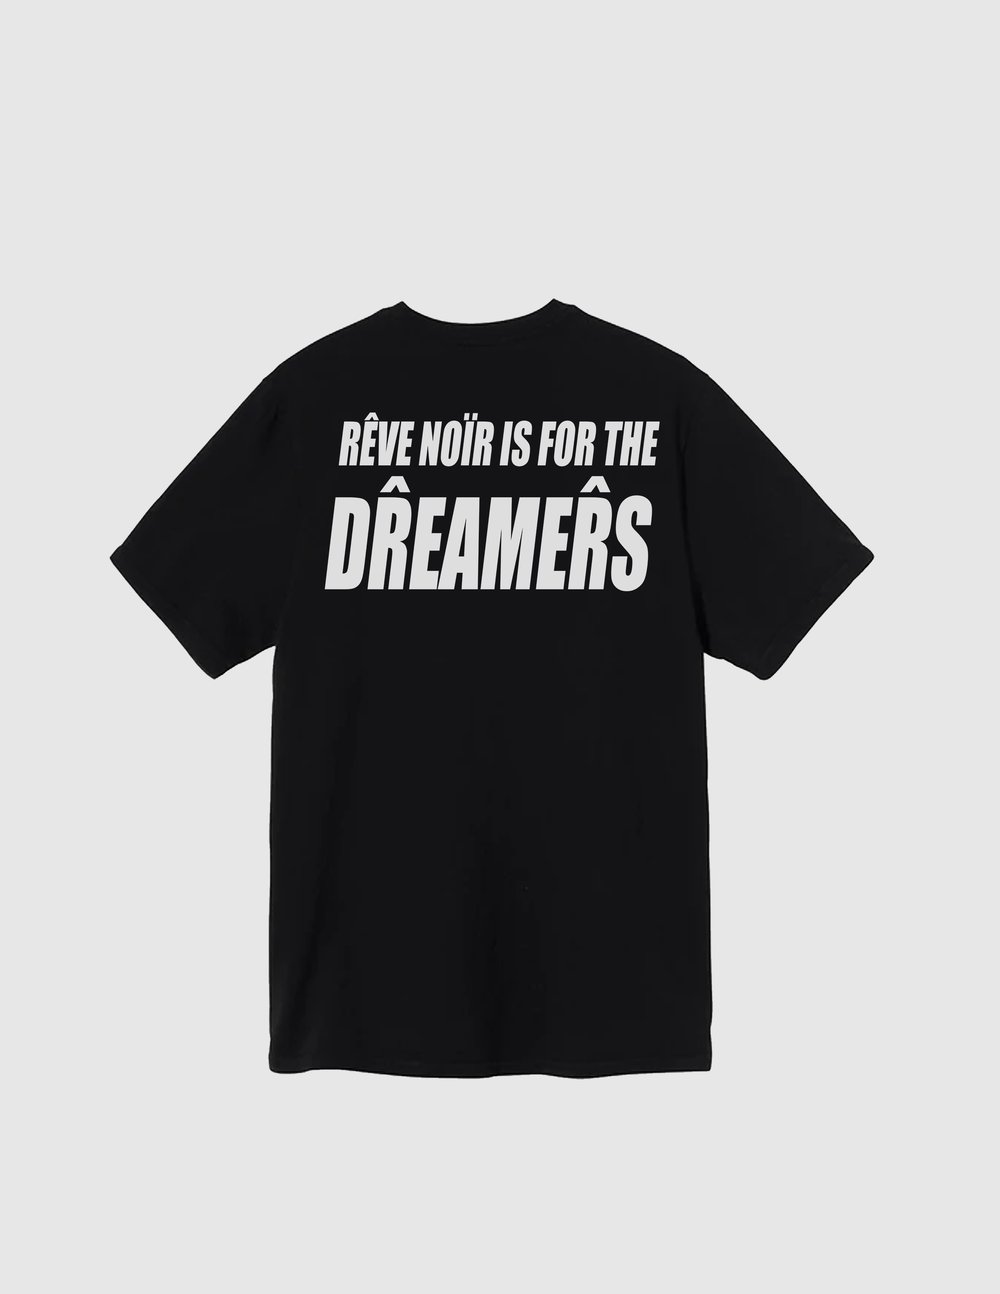 DREAMERS T-Shirt